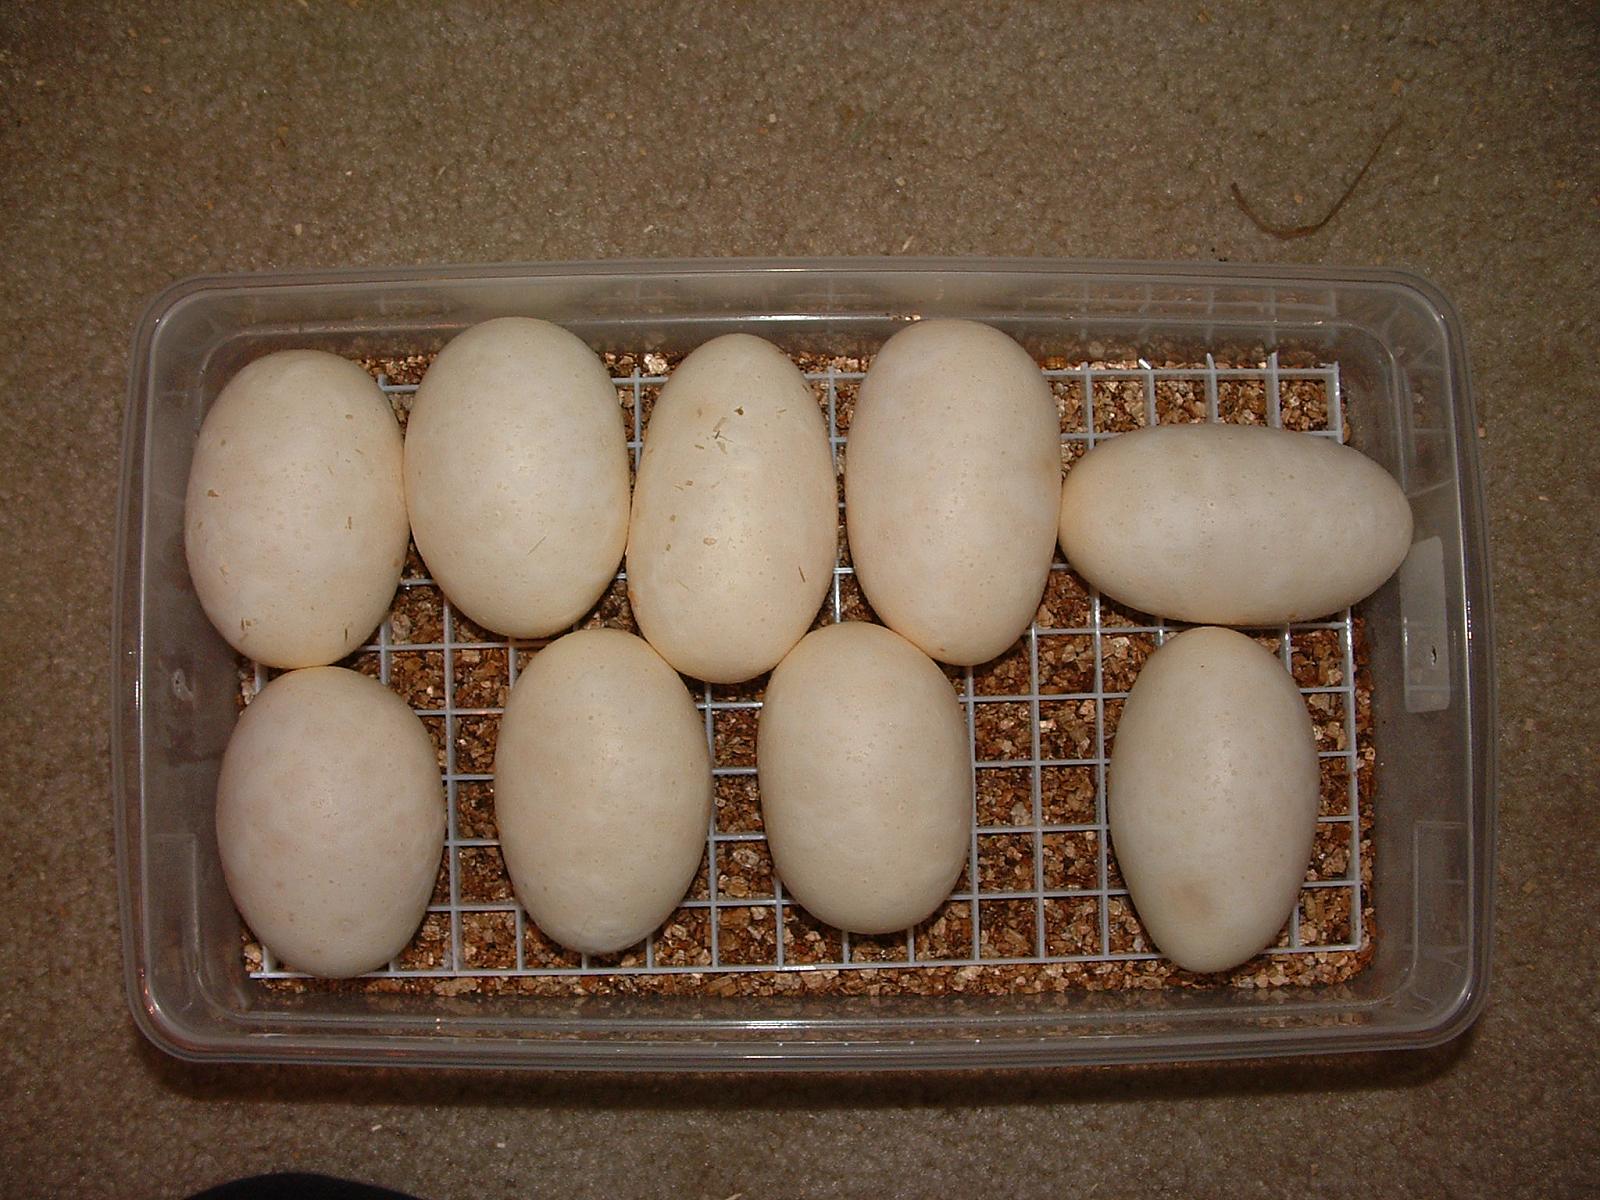 2012 Clutch 02 - Eggs In Tub